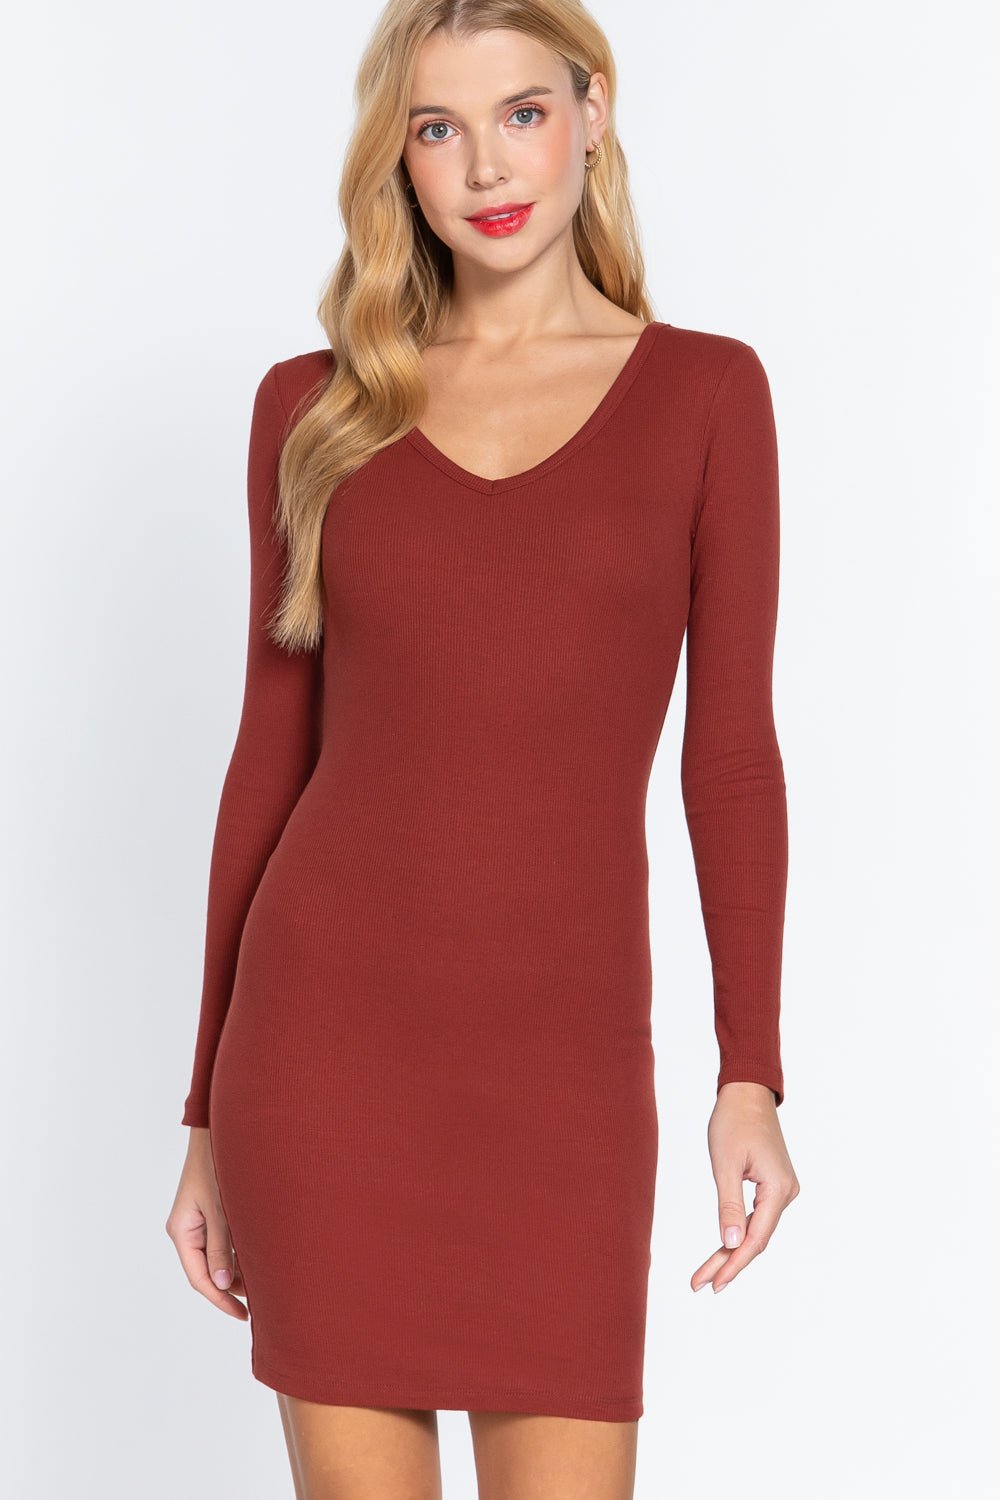 Lili Liliana 57% Cotton 38% Polyester 5% Spandex Long Sleeve V-neck Sweater Rib Mini Dress (Dark Rust)